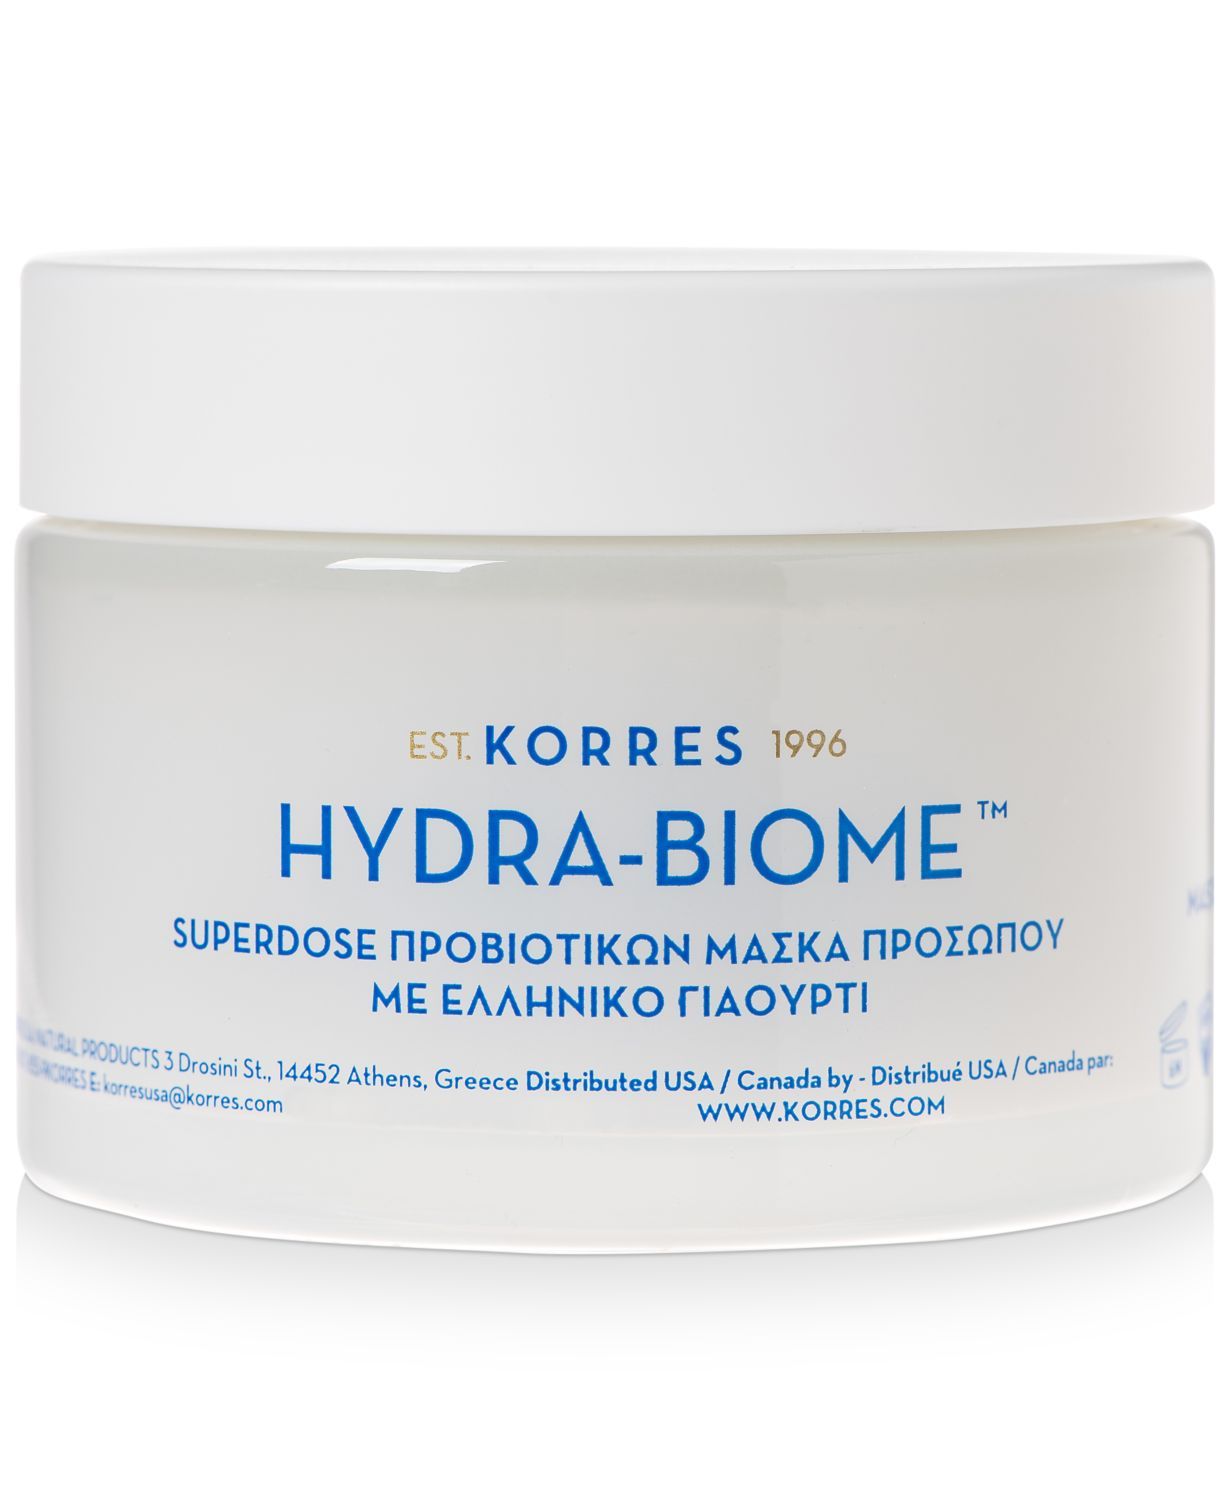 Hydra-Biome Probiotic Superdose Face Mask